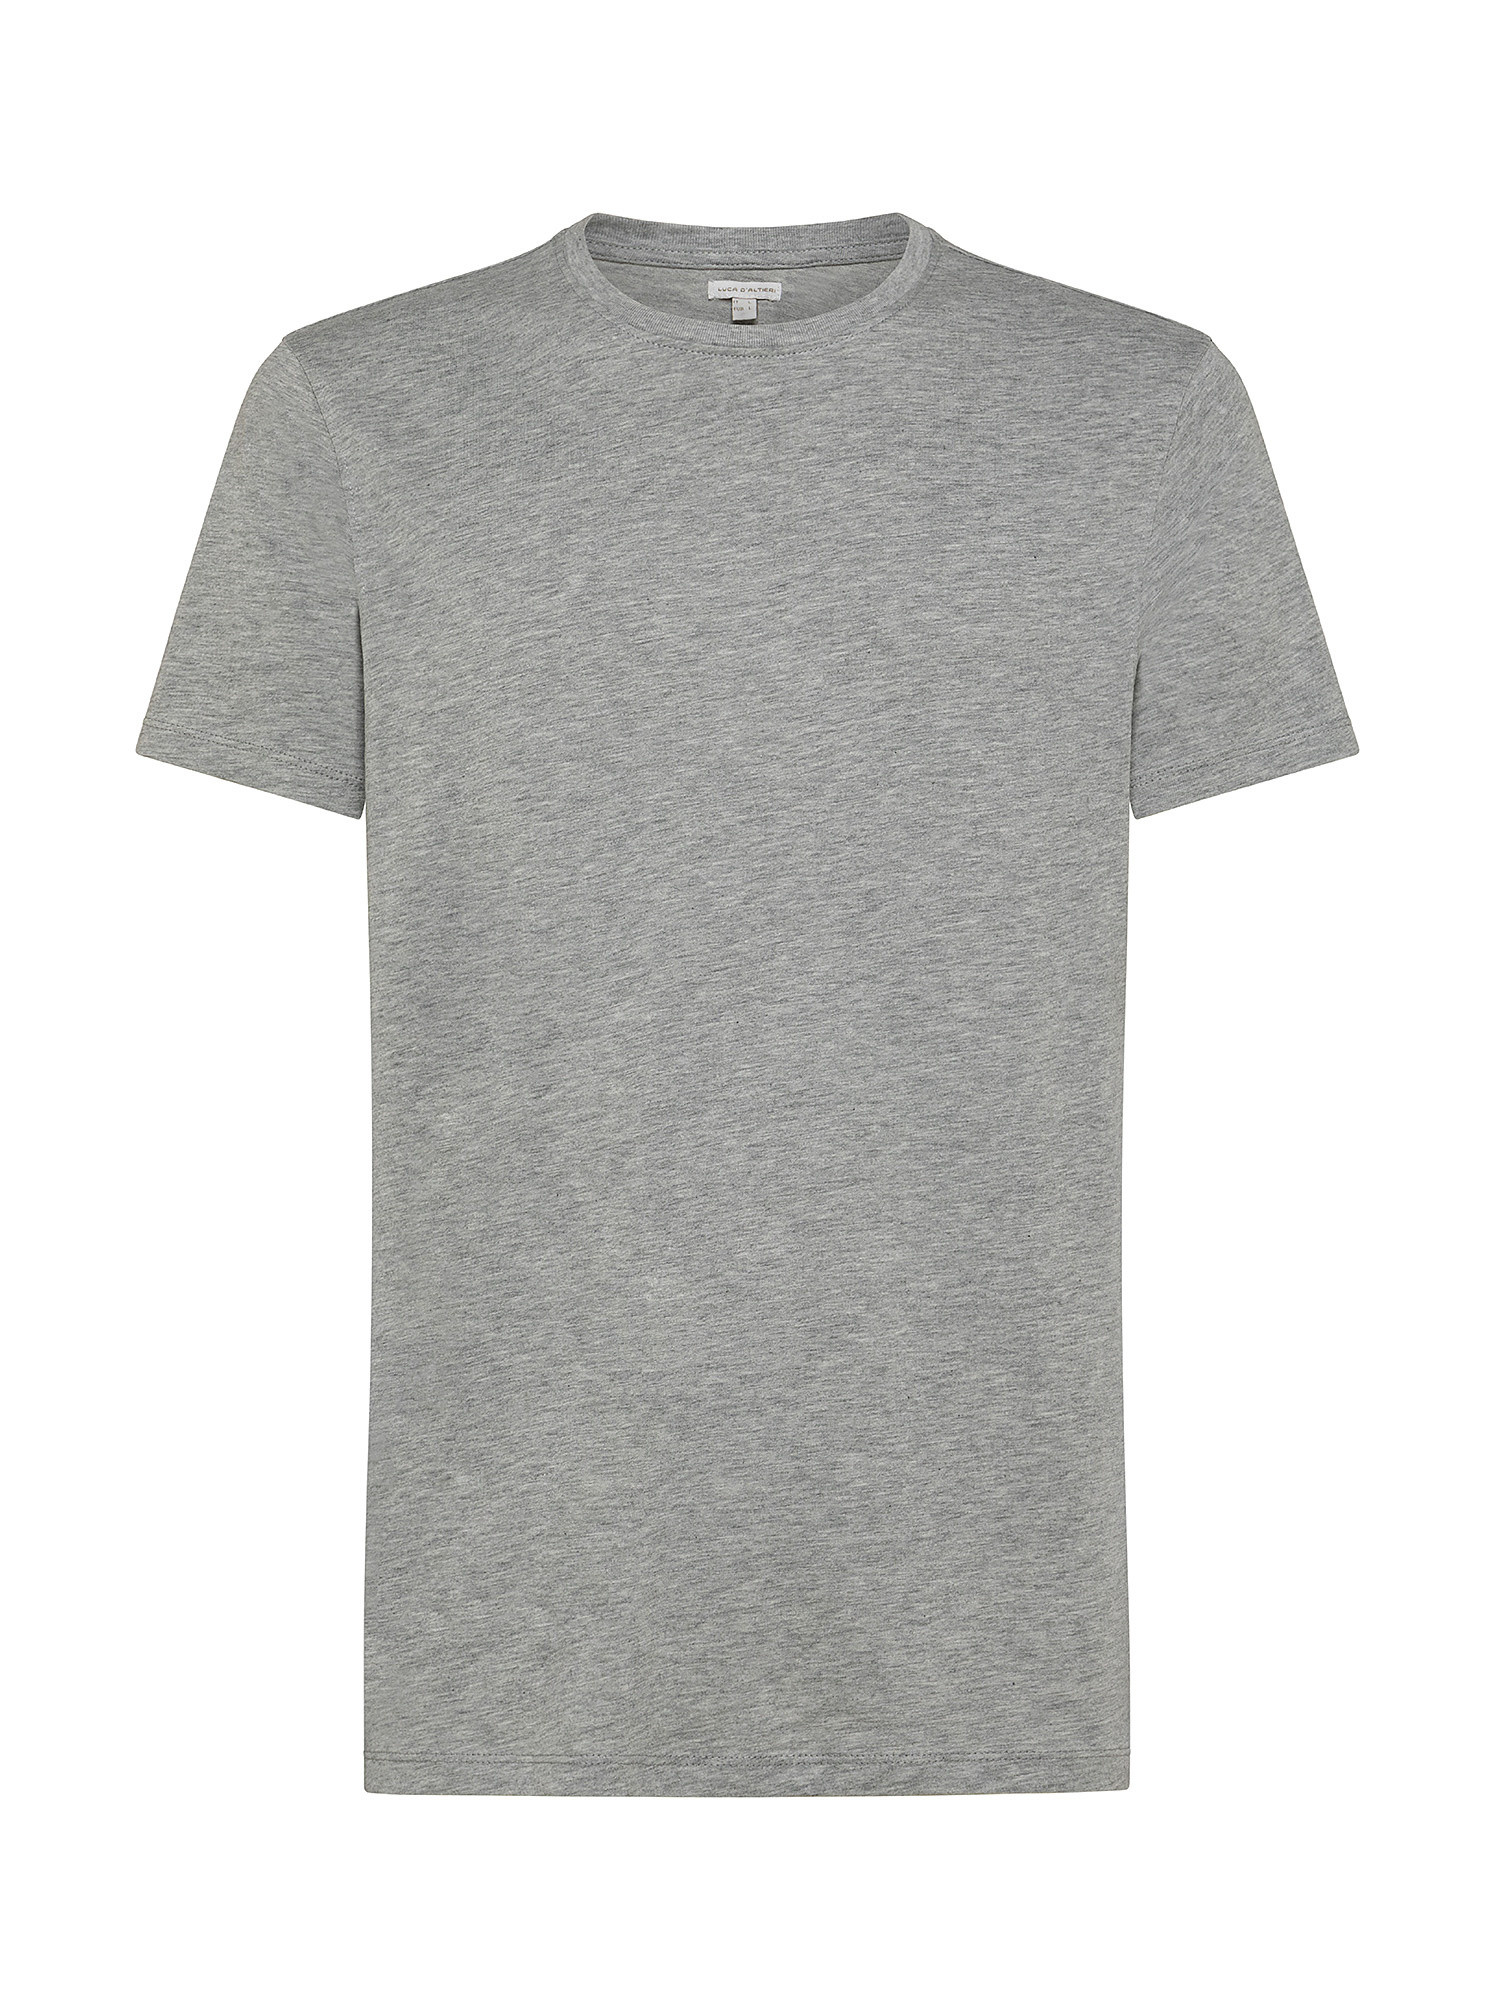 Luca D'Altieri - T-shirt girocollo cotone supima, Grigio, large image number 0